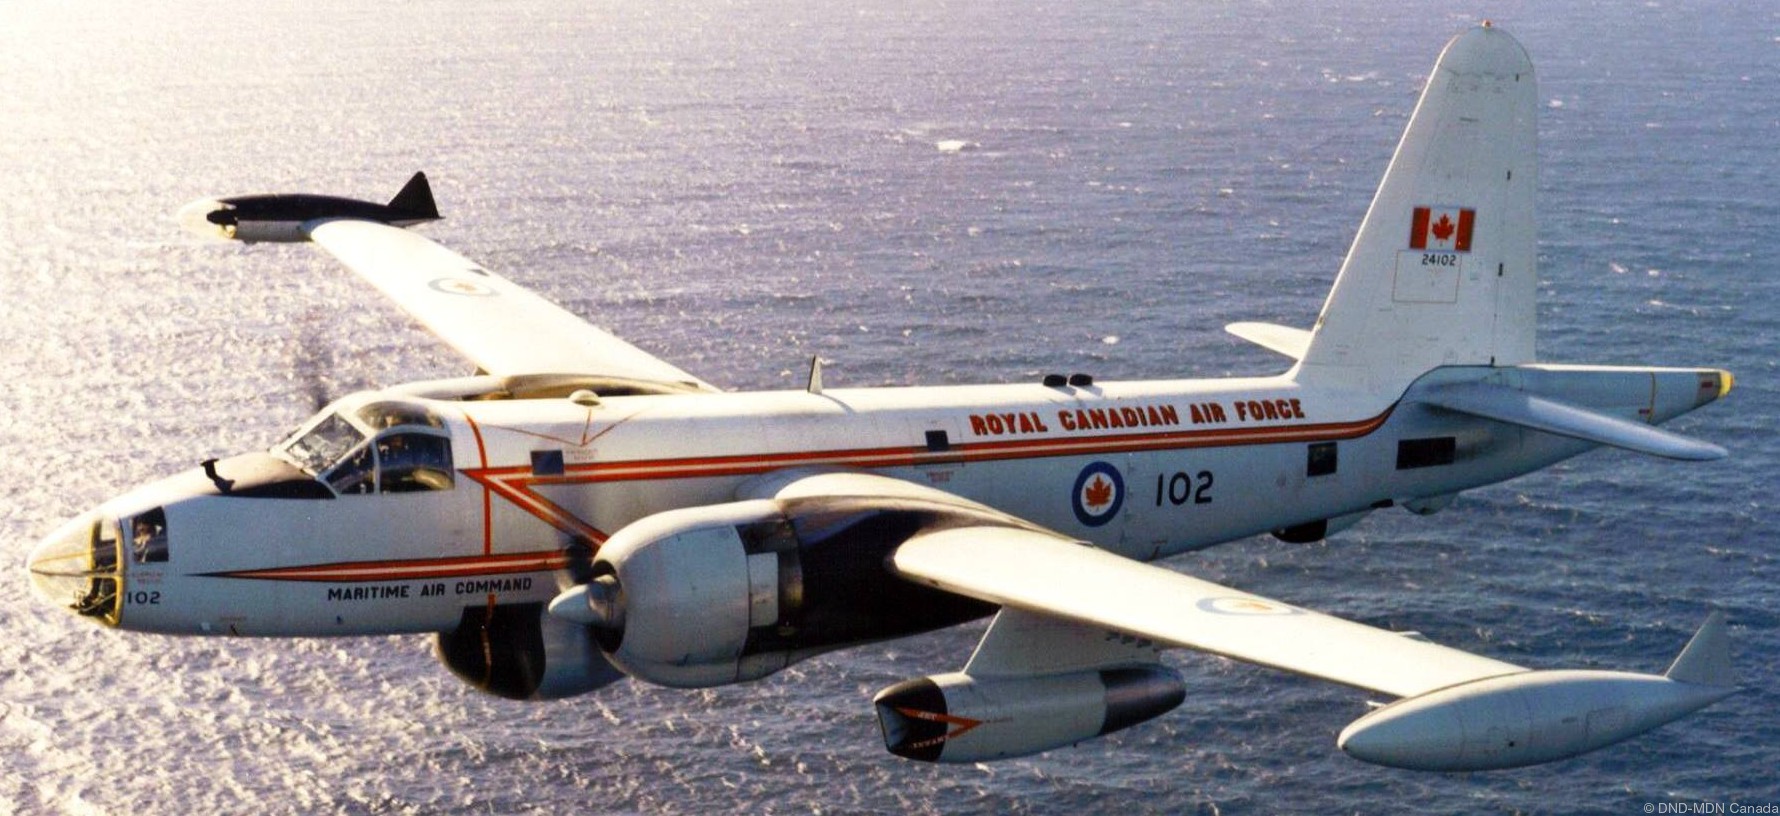 lockheed cp-122 neptune maritime patrol aircraft royal canadian air force navy p-2 05